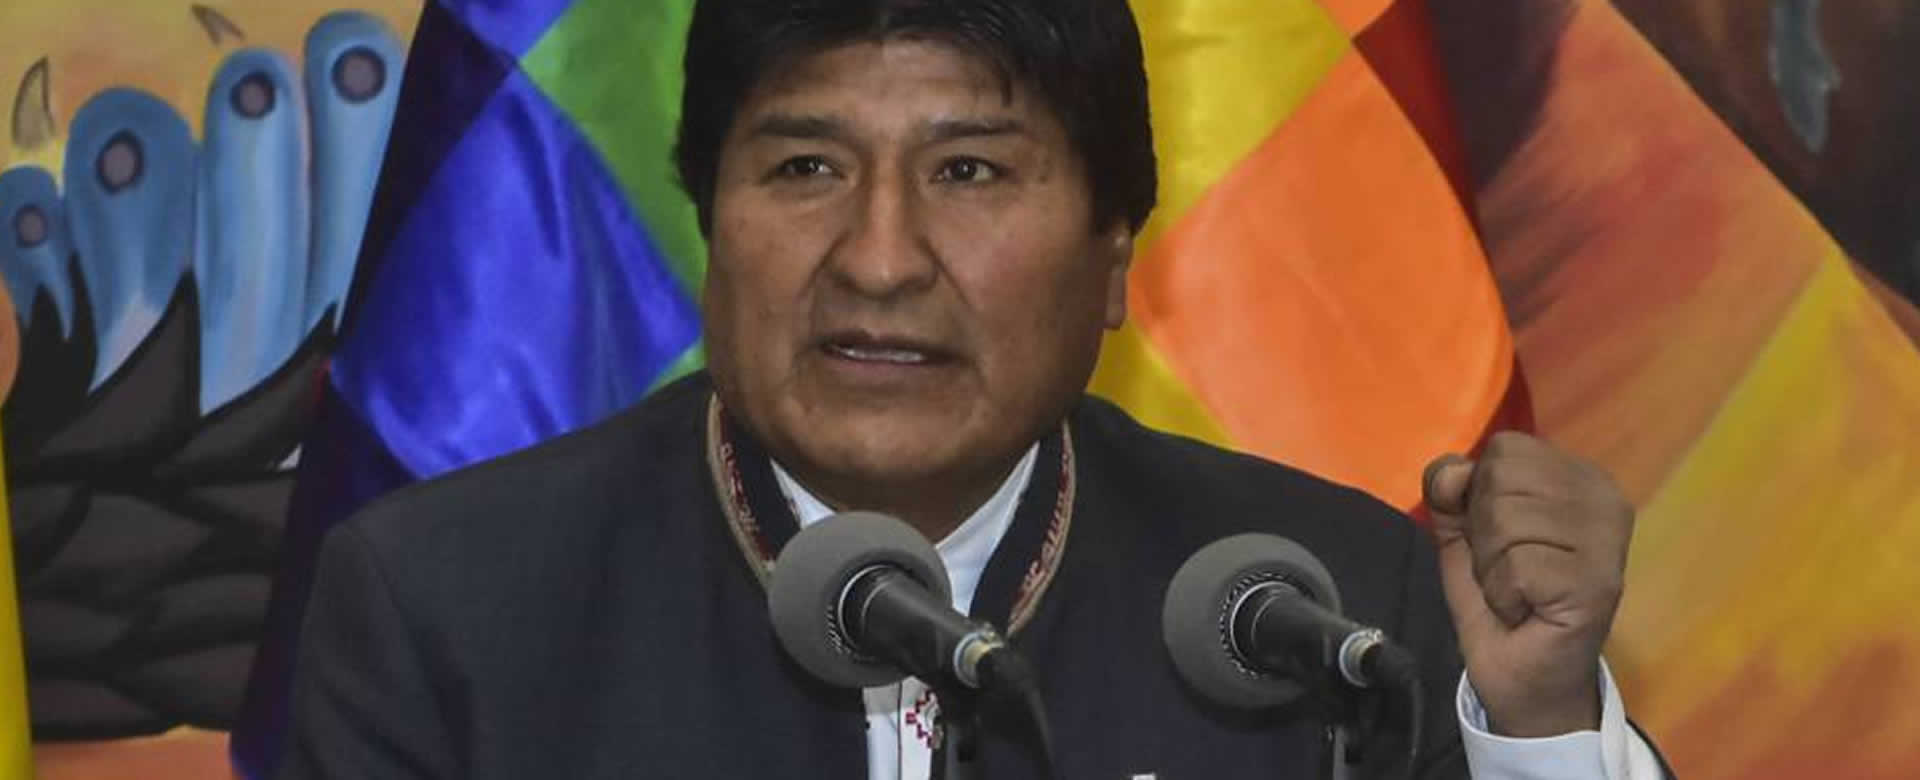 Líderes de América Latina se pronuncian en repudio al Golpe de Estado en Bolivia